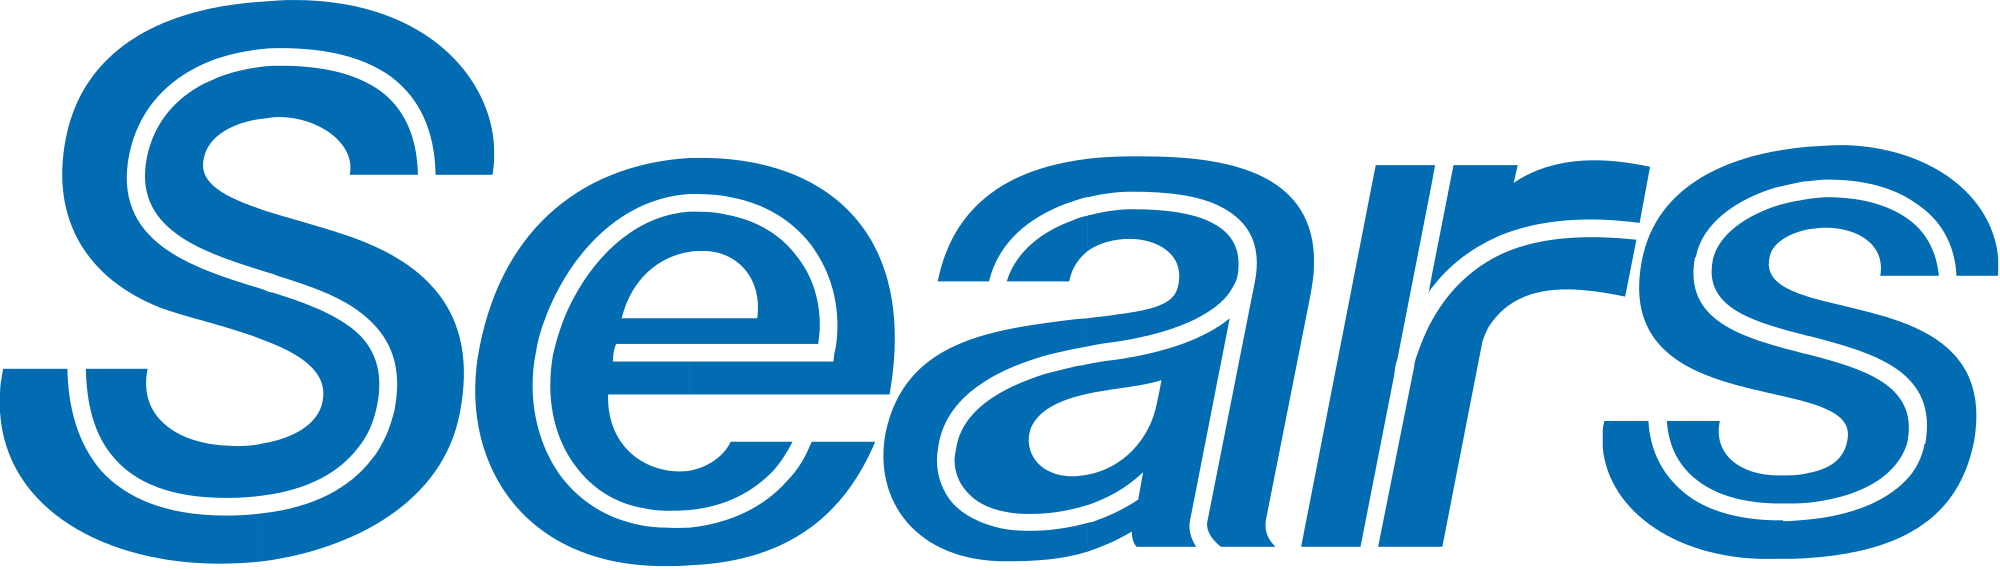 Sears.com Logo - Sears-Logo-Vector-Free-Download - Geoff Weinstein